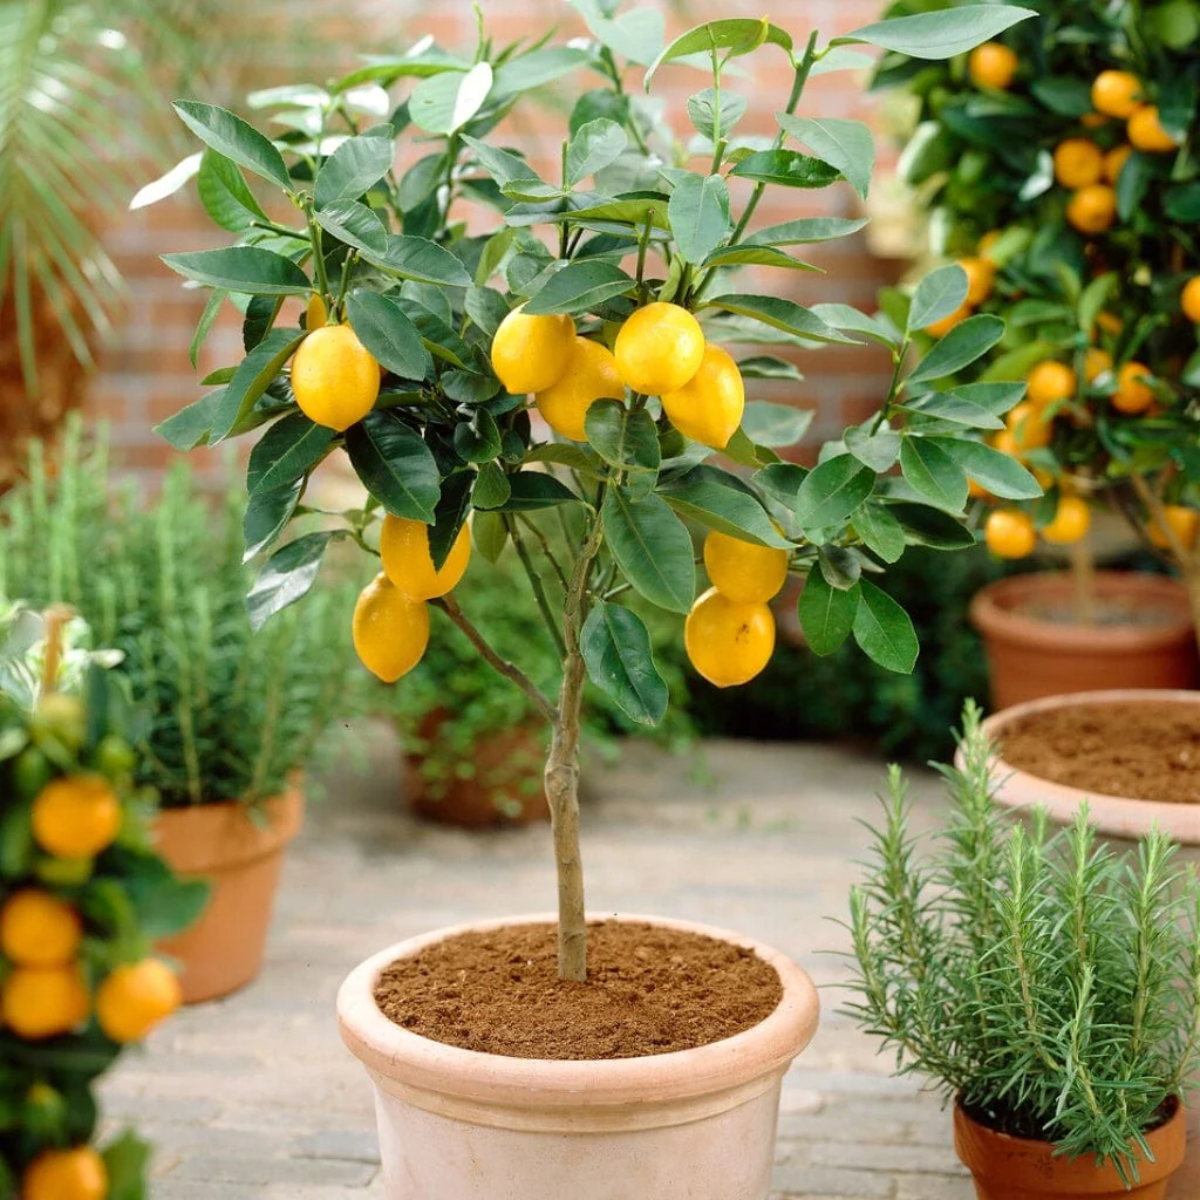 zitronenbaum im garten in braunem keramiktopf neben anderen pflanzen